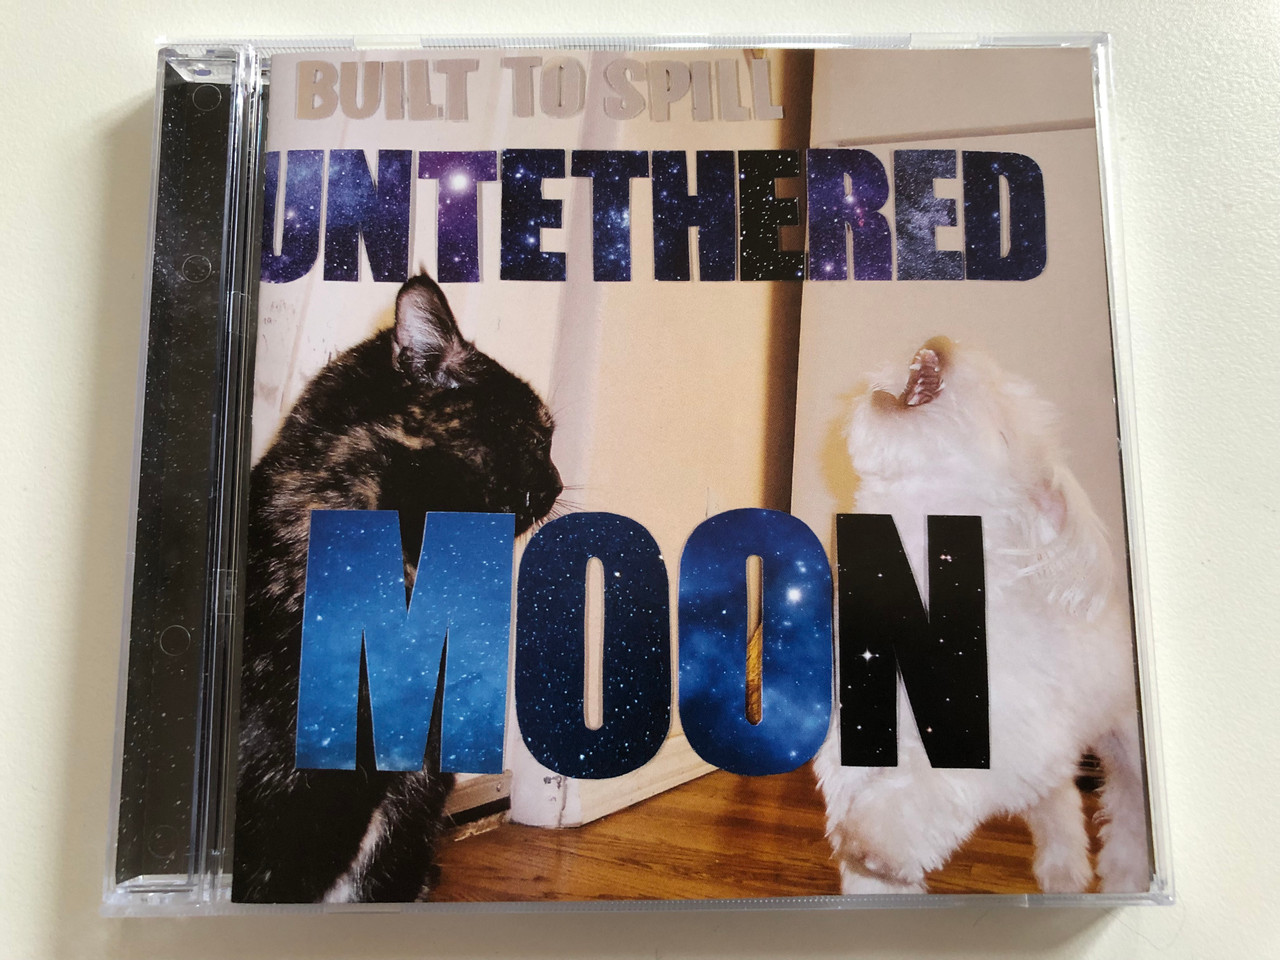 Built To Spill – Untethered Moon / Warner Bros. Records Audio CD 2015 /  9362-49315-7 - bibleinmylanguage